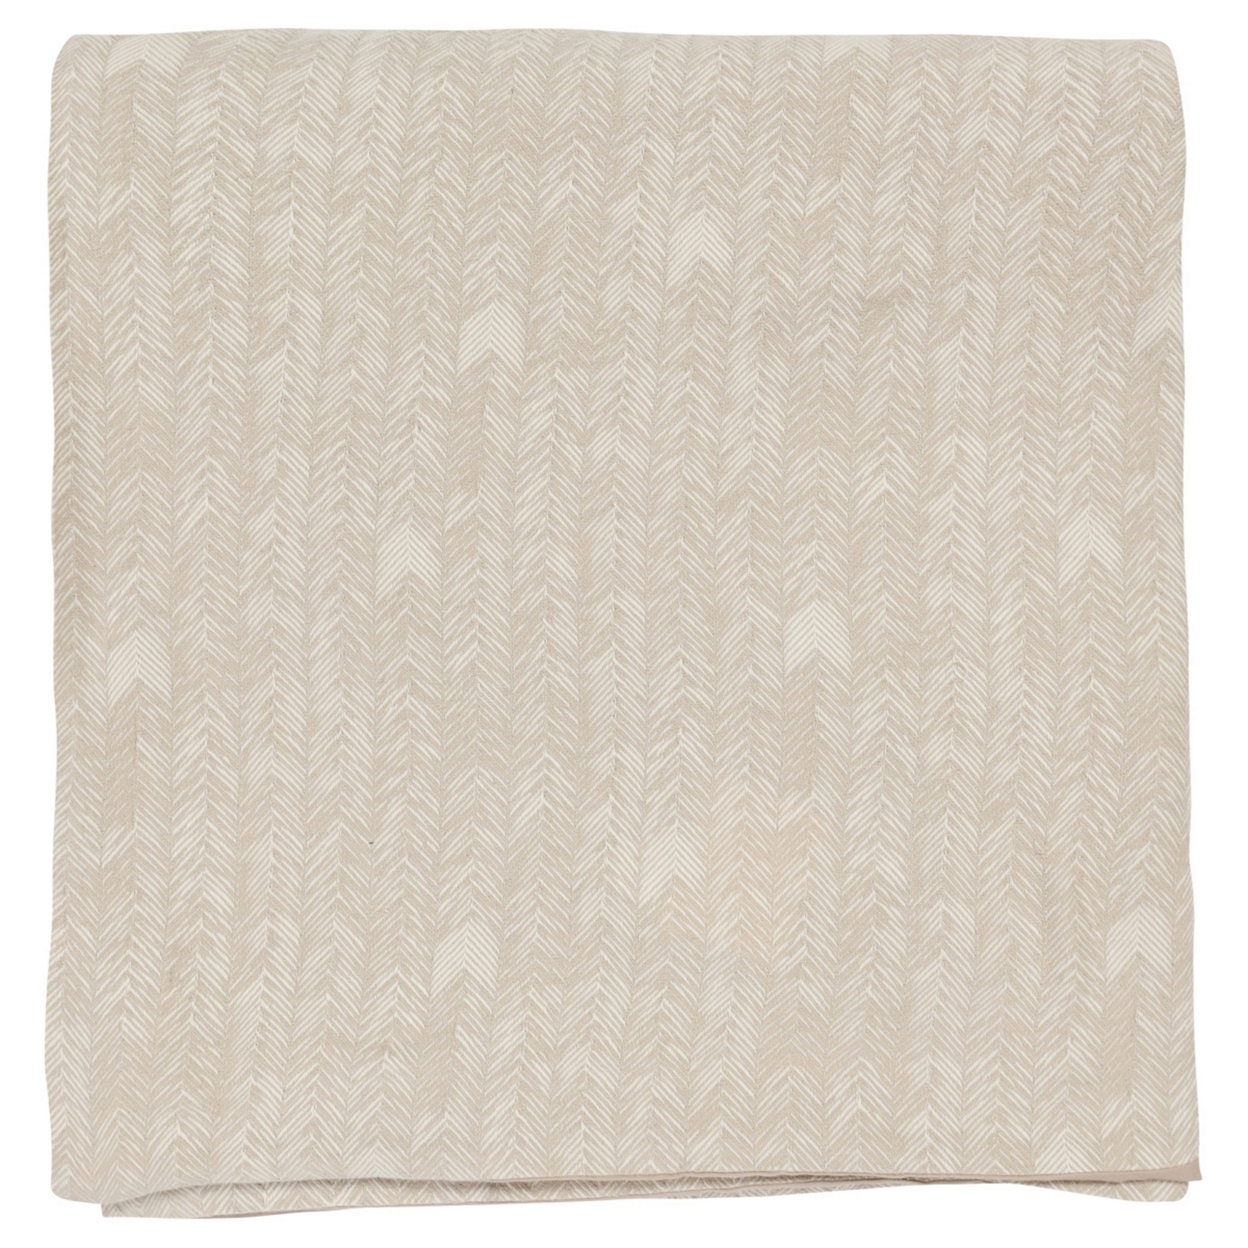 Zima King Size Cotton Duvet Cover, Woven French Herringbone Pattern, Beige- Saltoro Sherpi